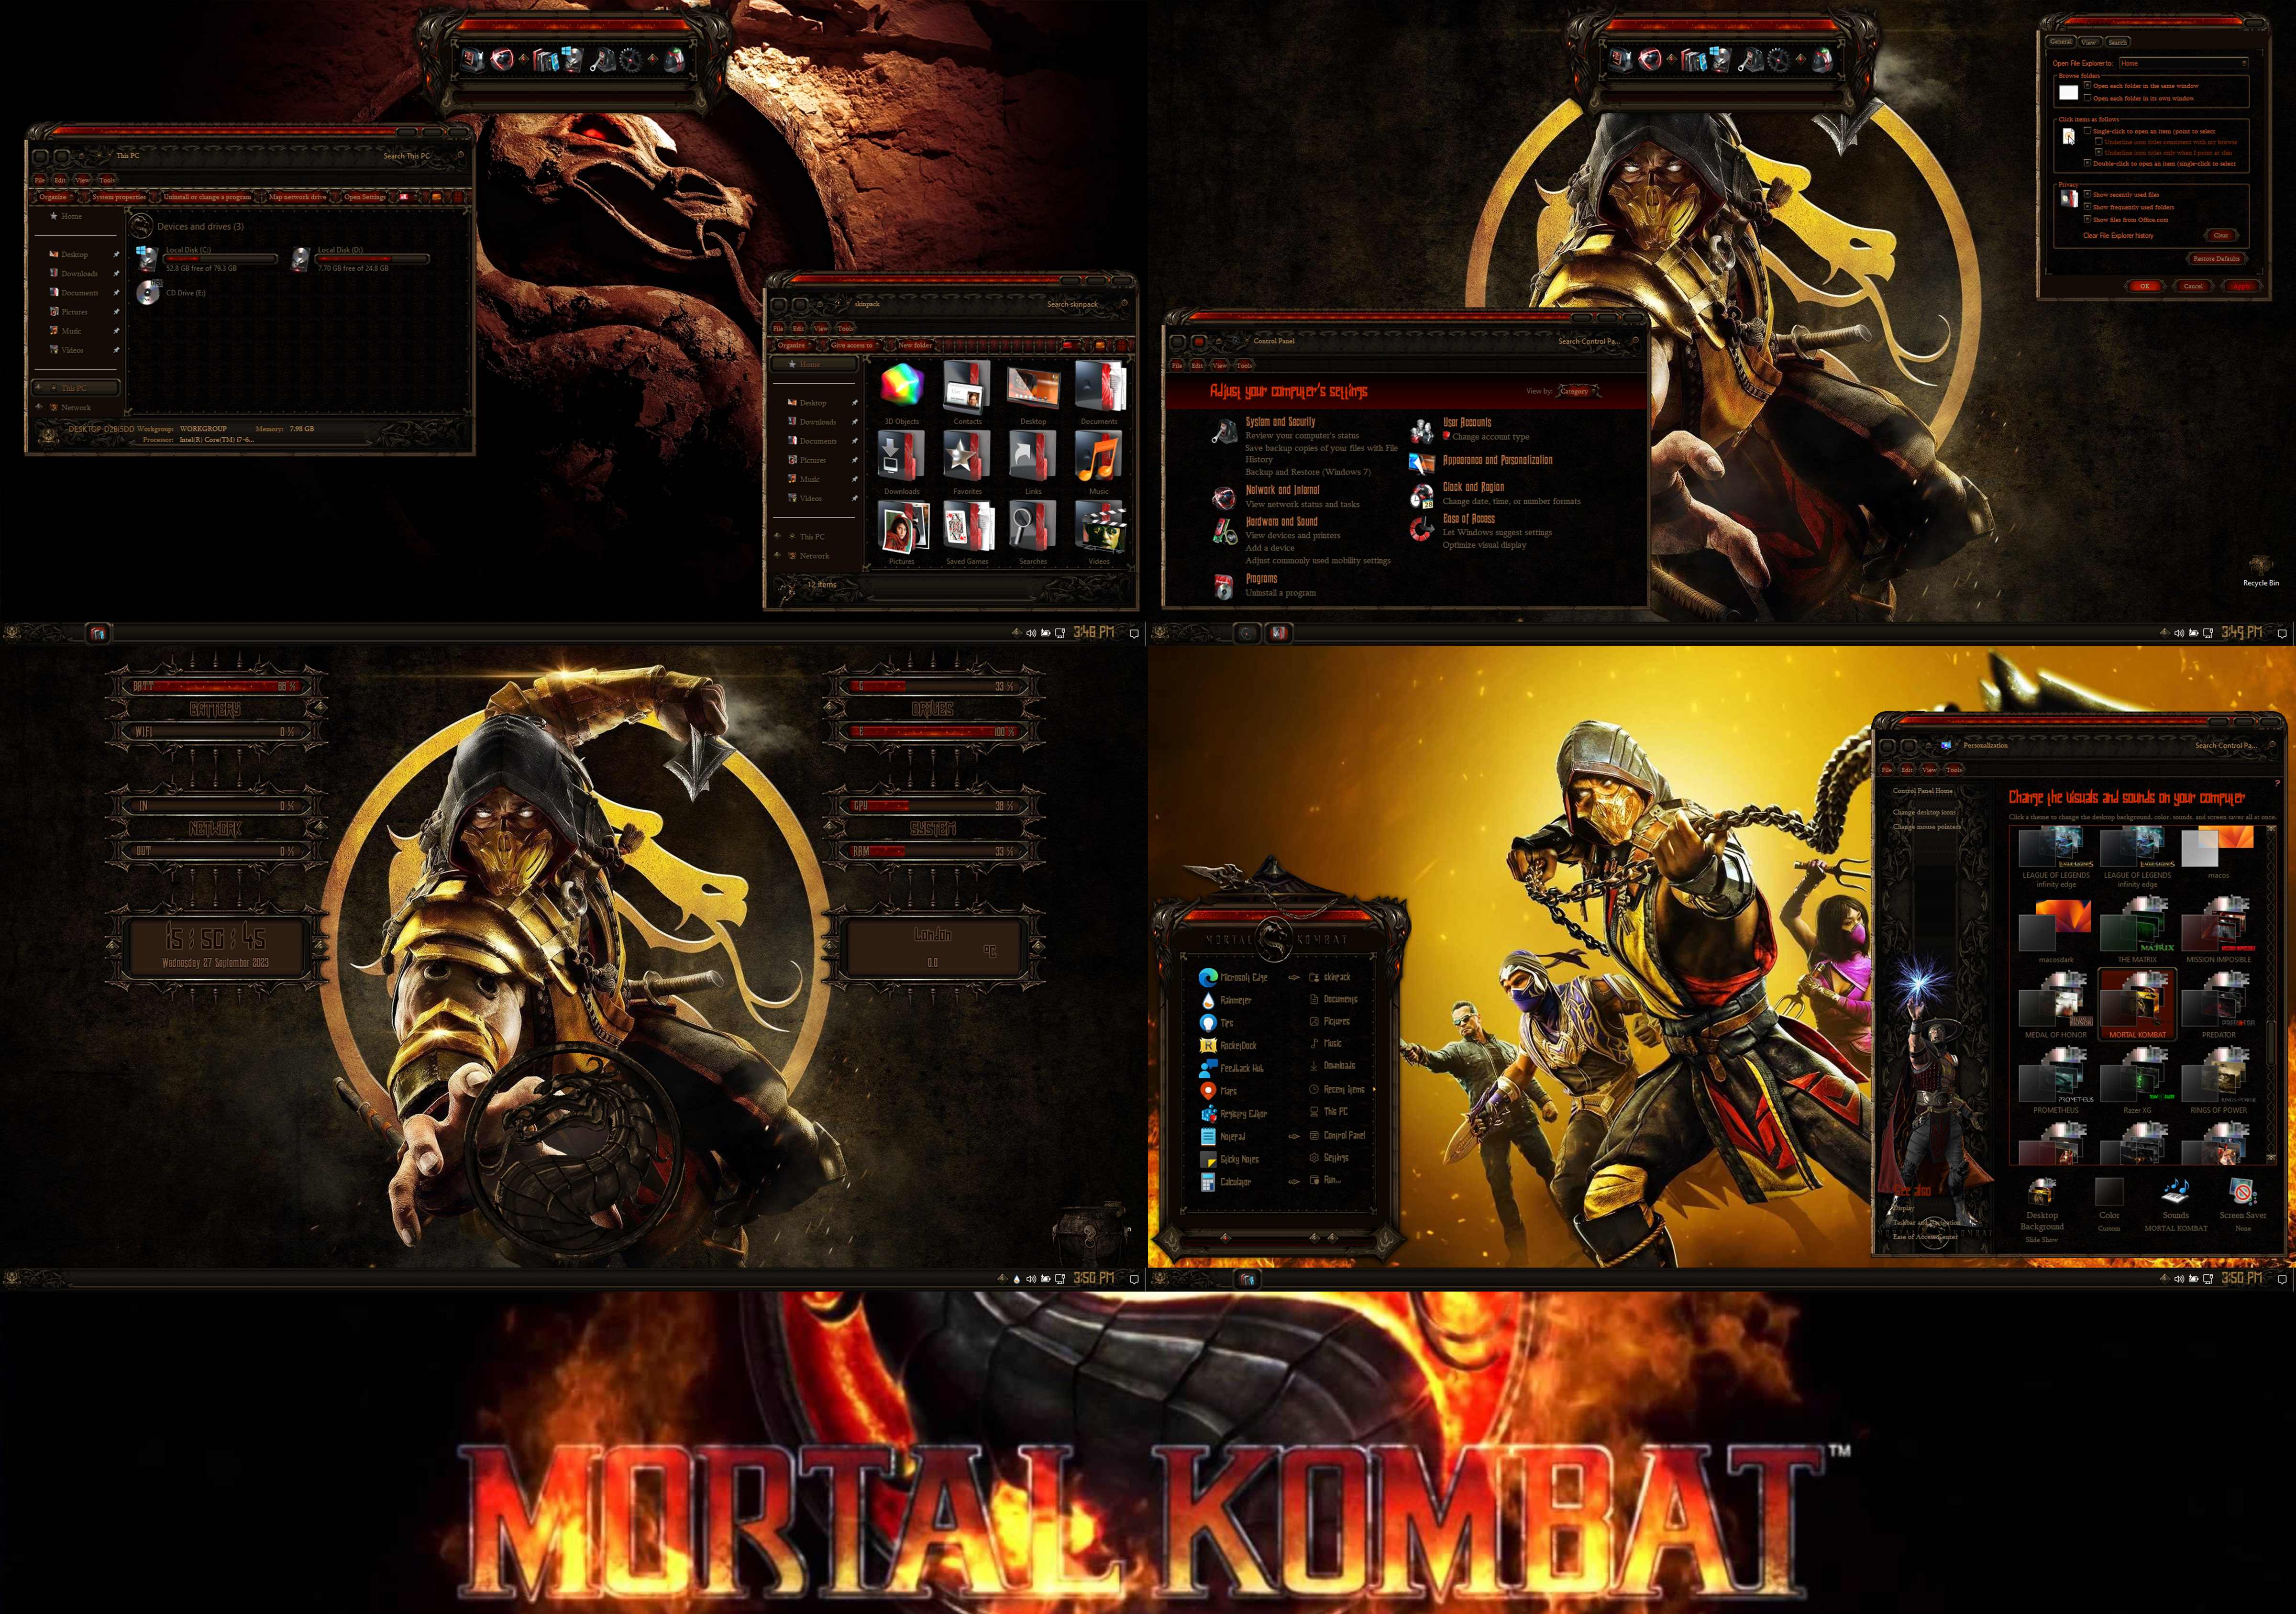 100+] Mortal Kombat 11 Pictures